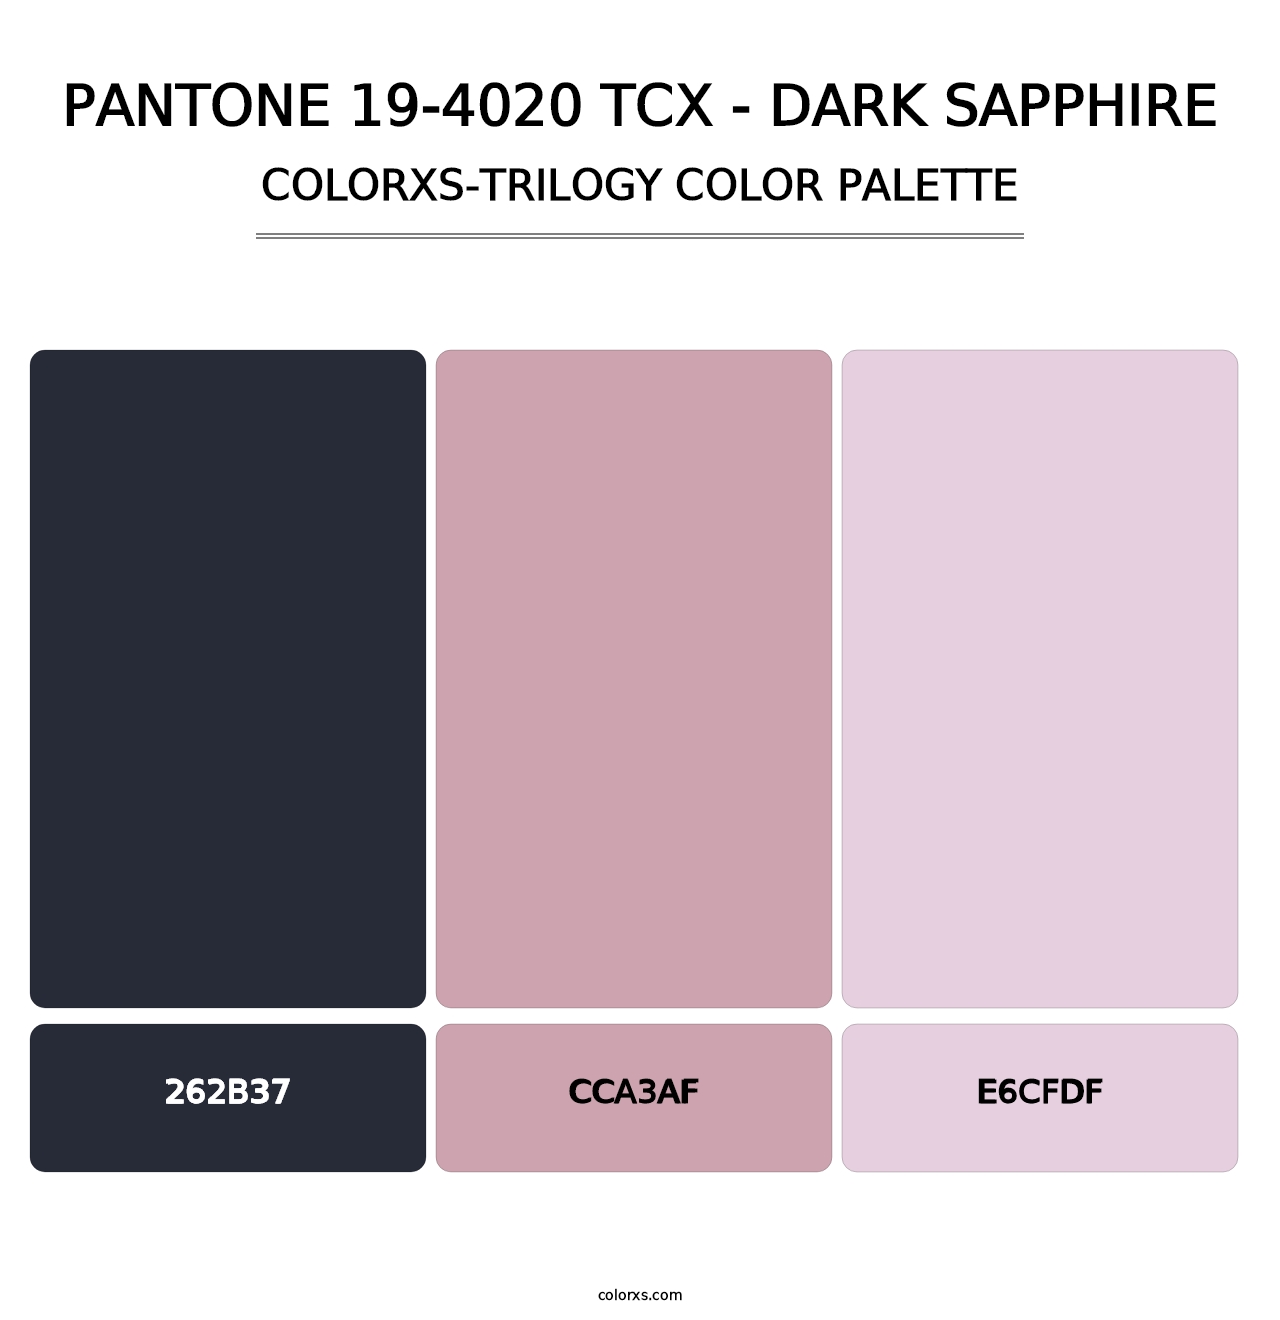 PANTONE 19-4020 TCX - Dark Sapphire - Colorxs Trilogy Palette